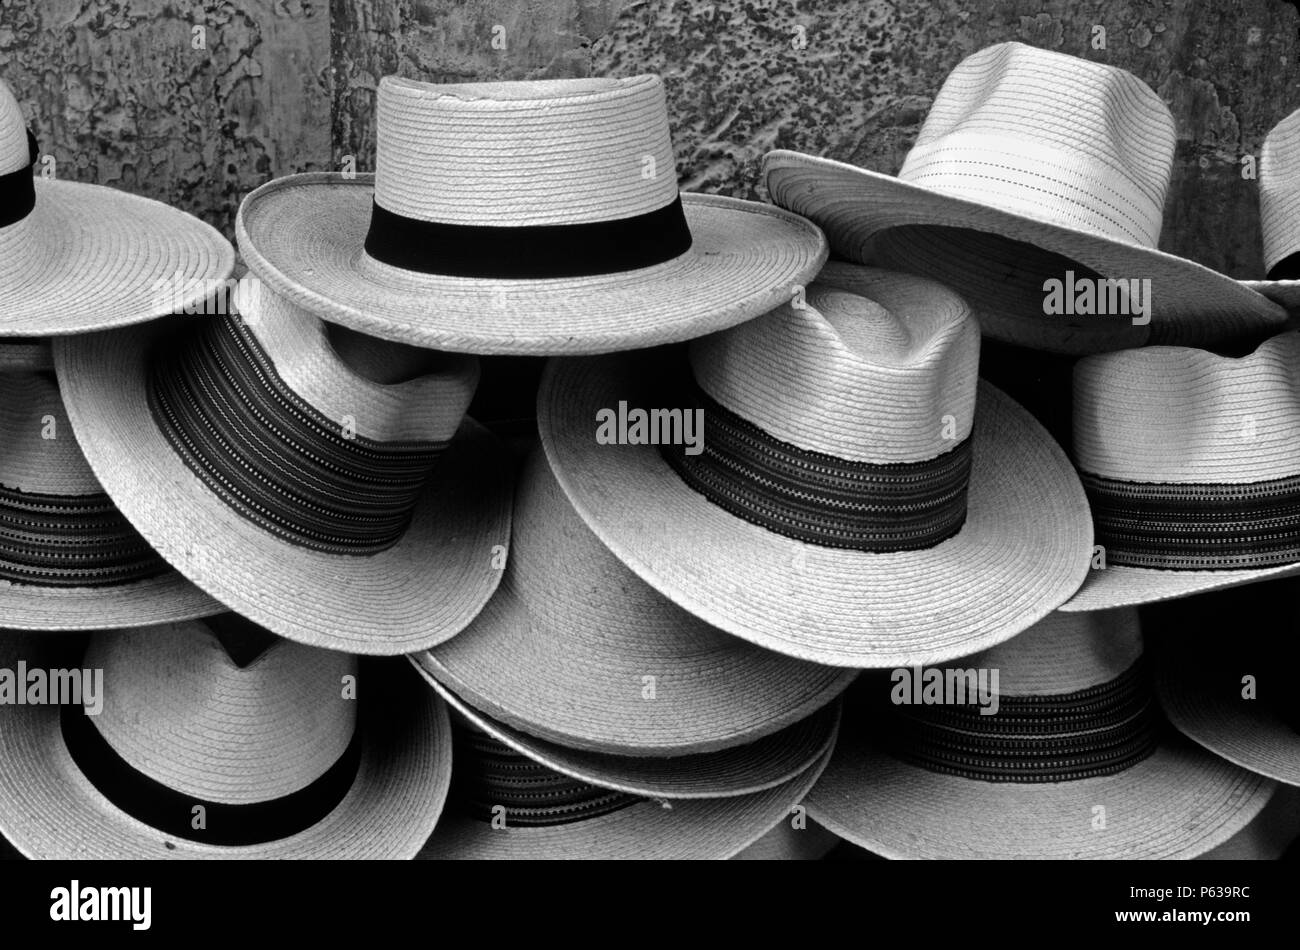 PANAMA HATS for sale in the streets during SEMANA SANTA (EASTER) - ANTIGUA, GUATAMALA Stock Photo